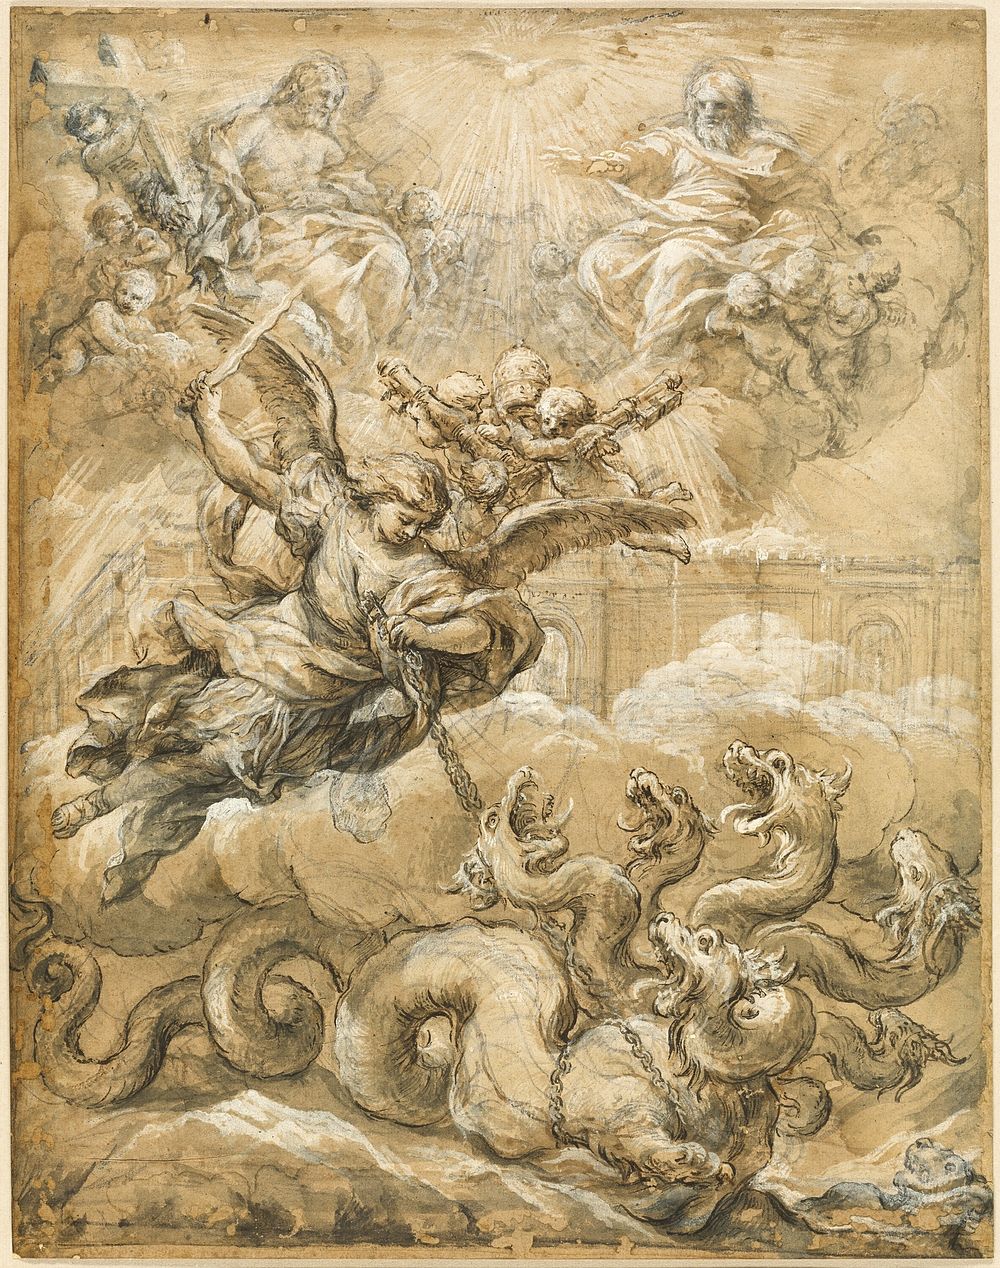 The Holy Trinity with Saint Michael Conquering the Dragon by Pietro da Cortona